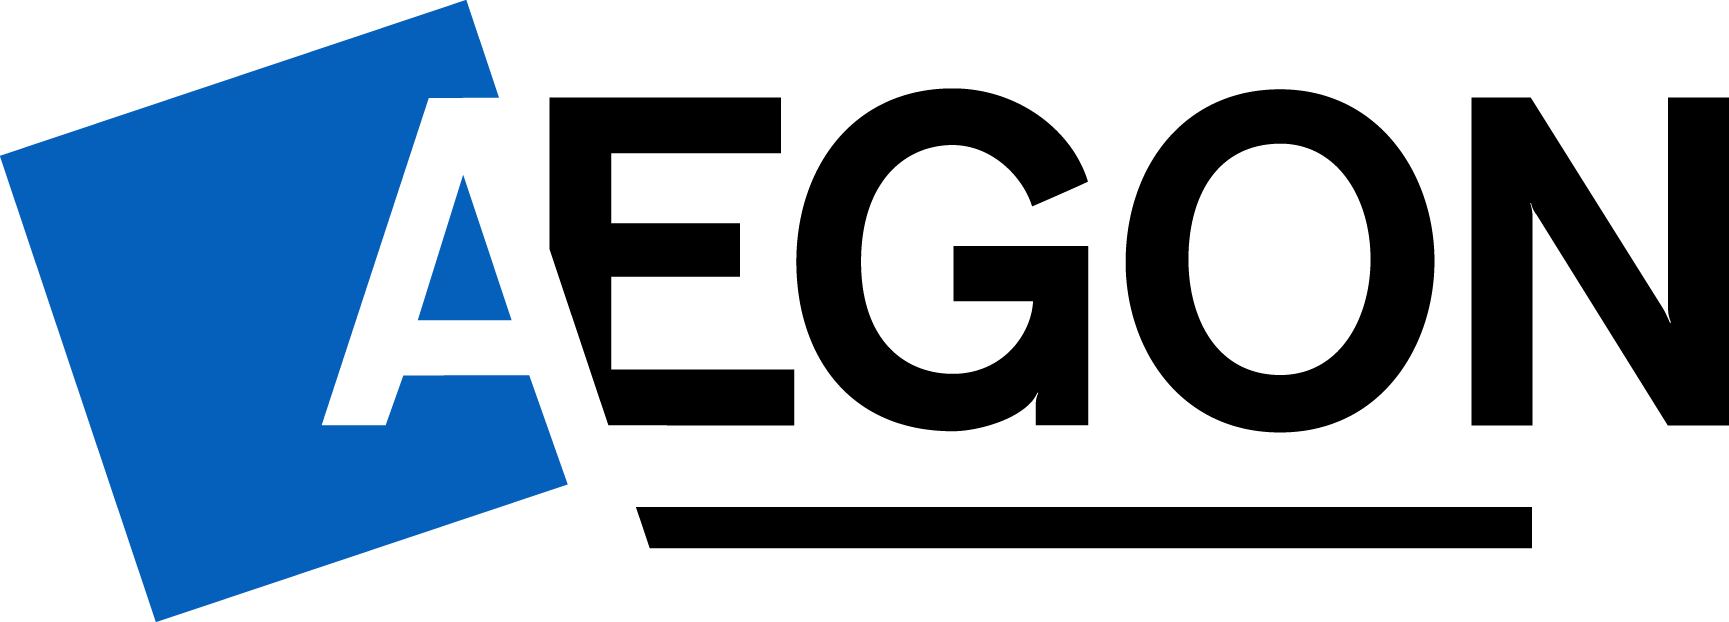 Aegon Cappital logo